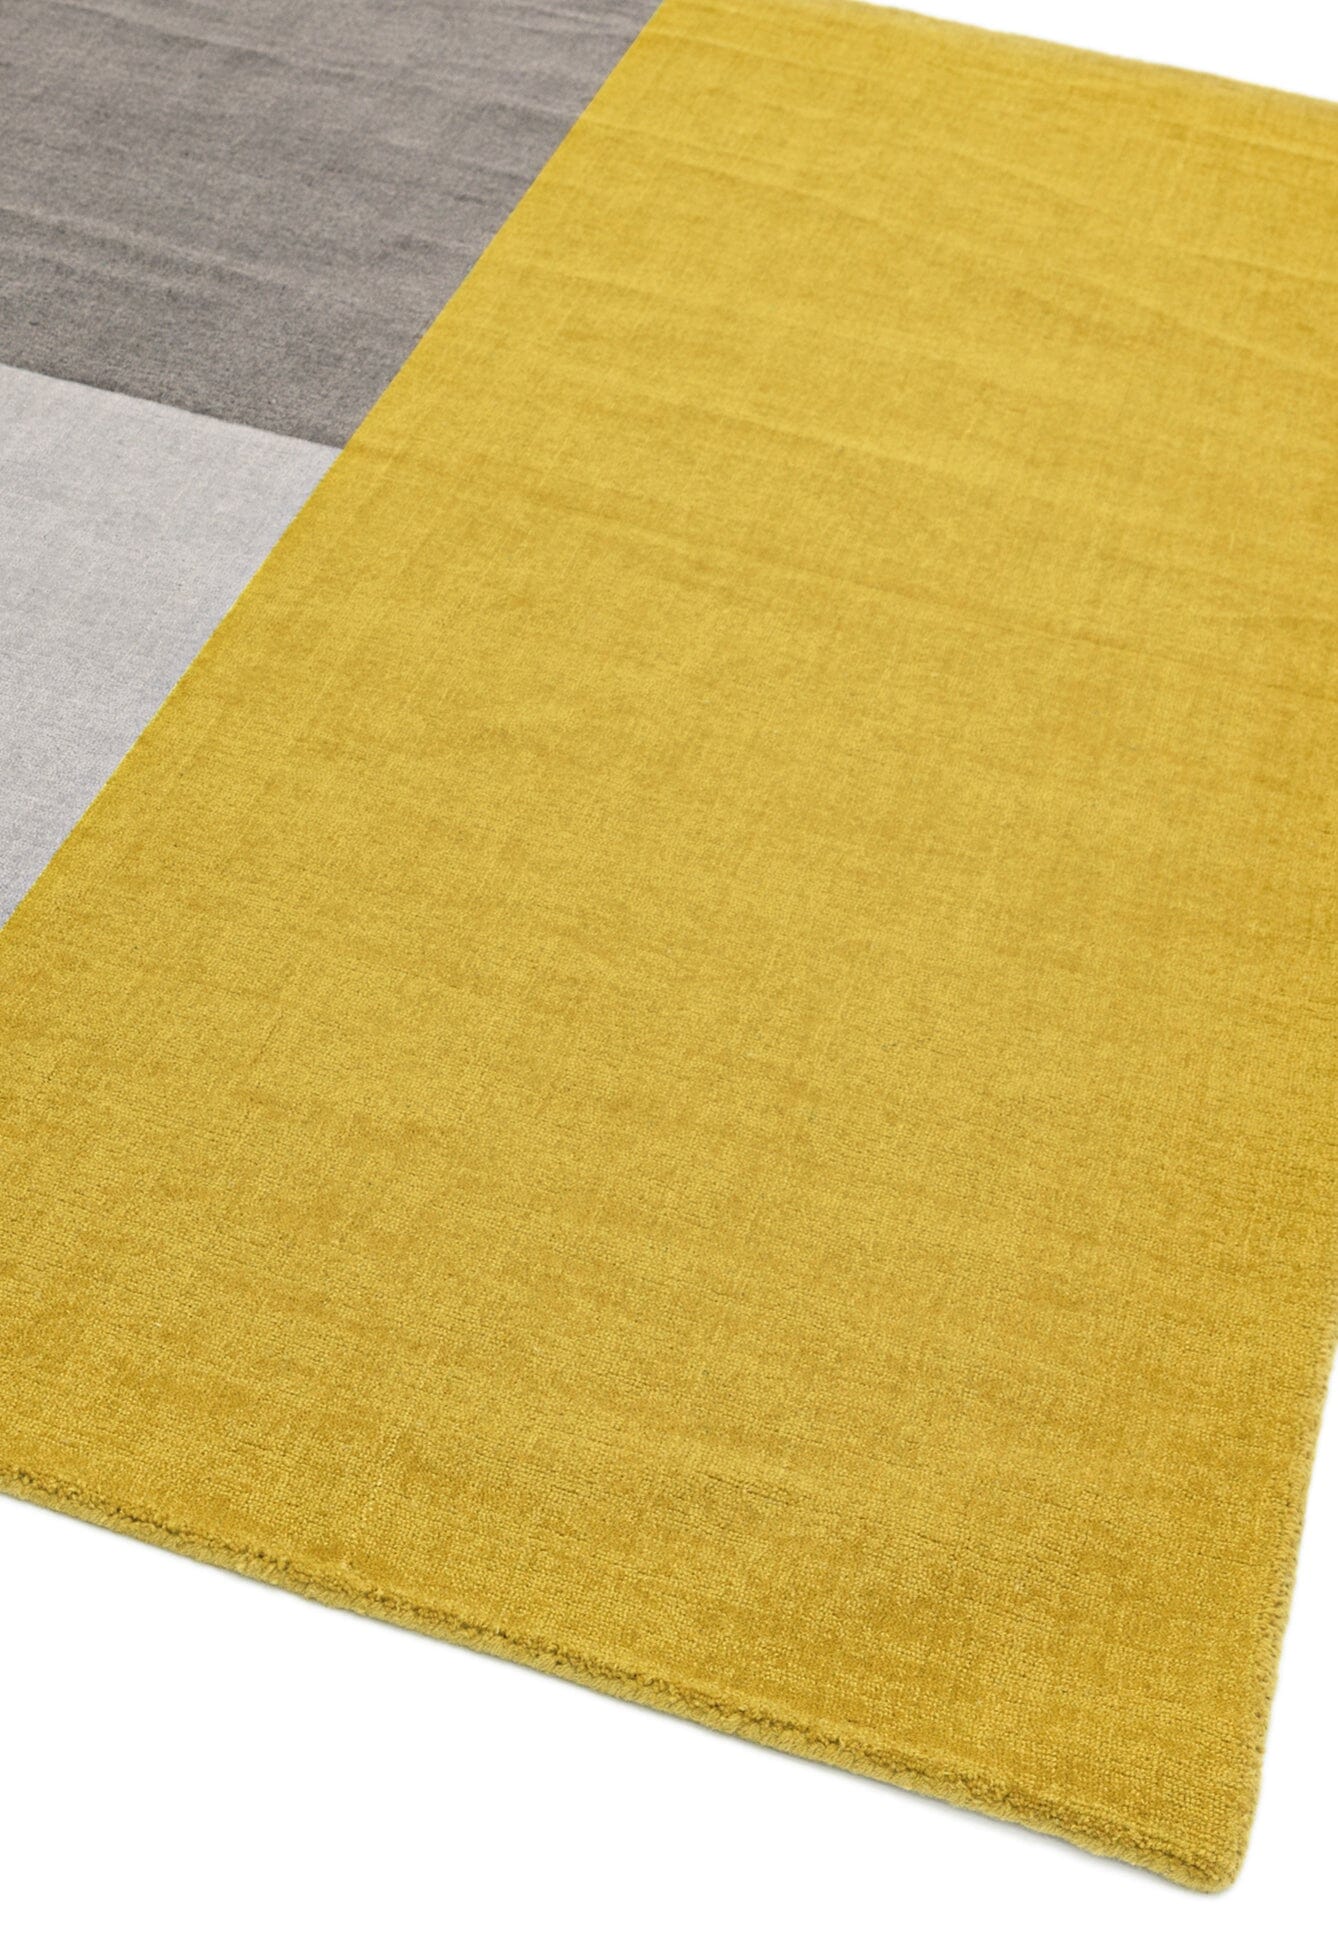  Asiatic Carpets-Asiatic Carpets Blox Hand Woven Rug Mustard - 160 x 230cm-Multicoloured 013 